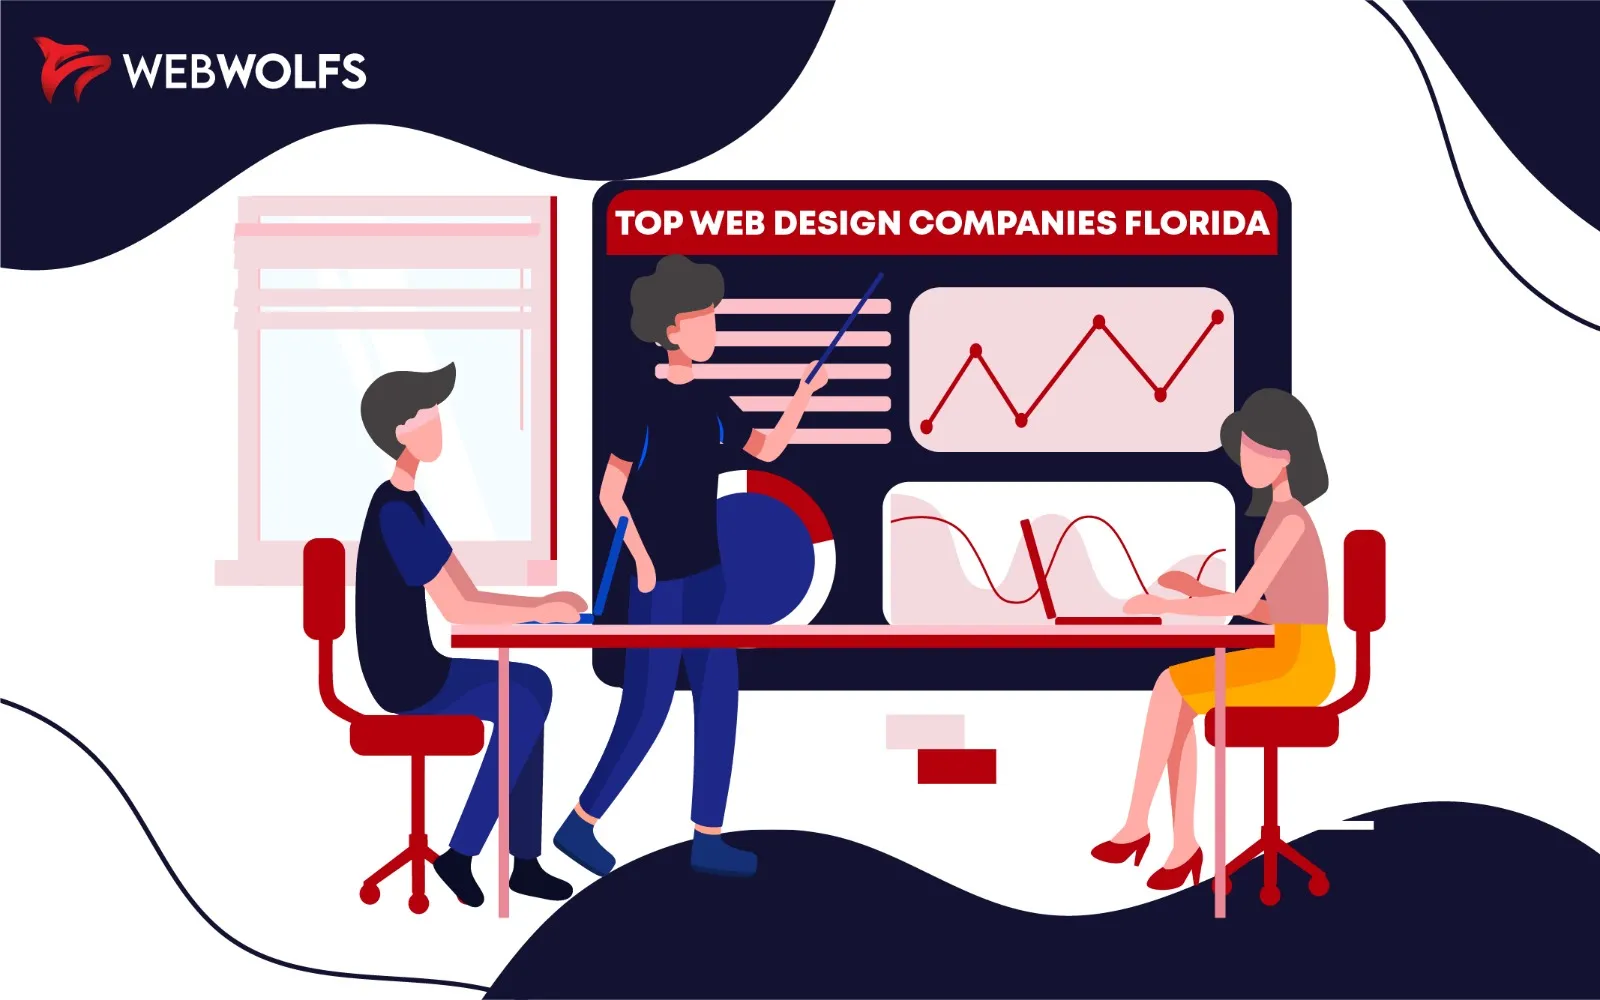 How Top Web Design Companies Florida Price Their Services?